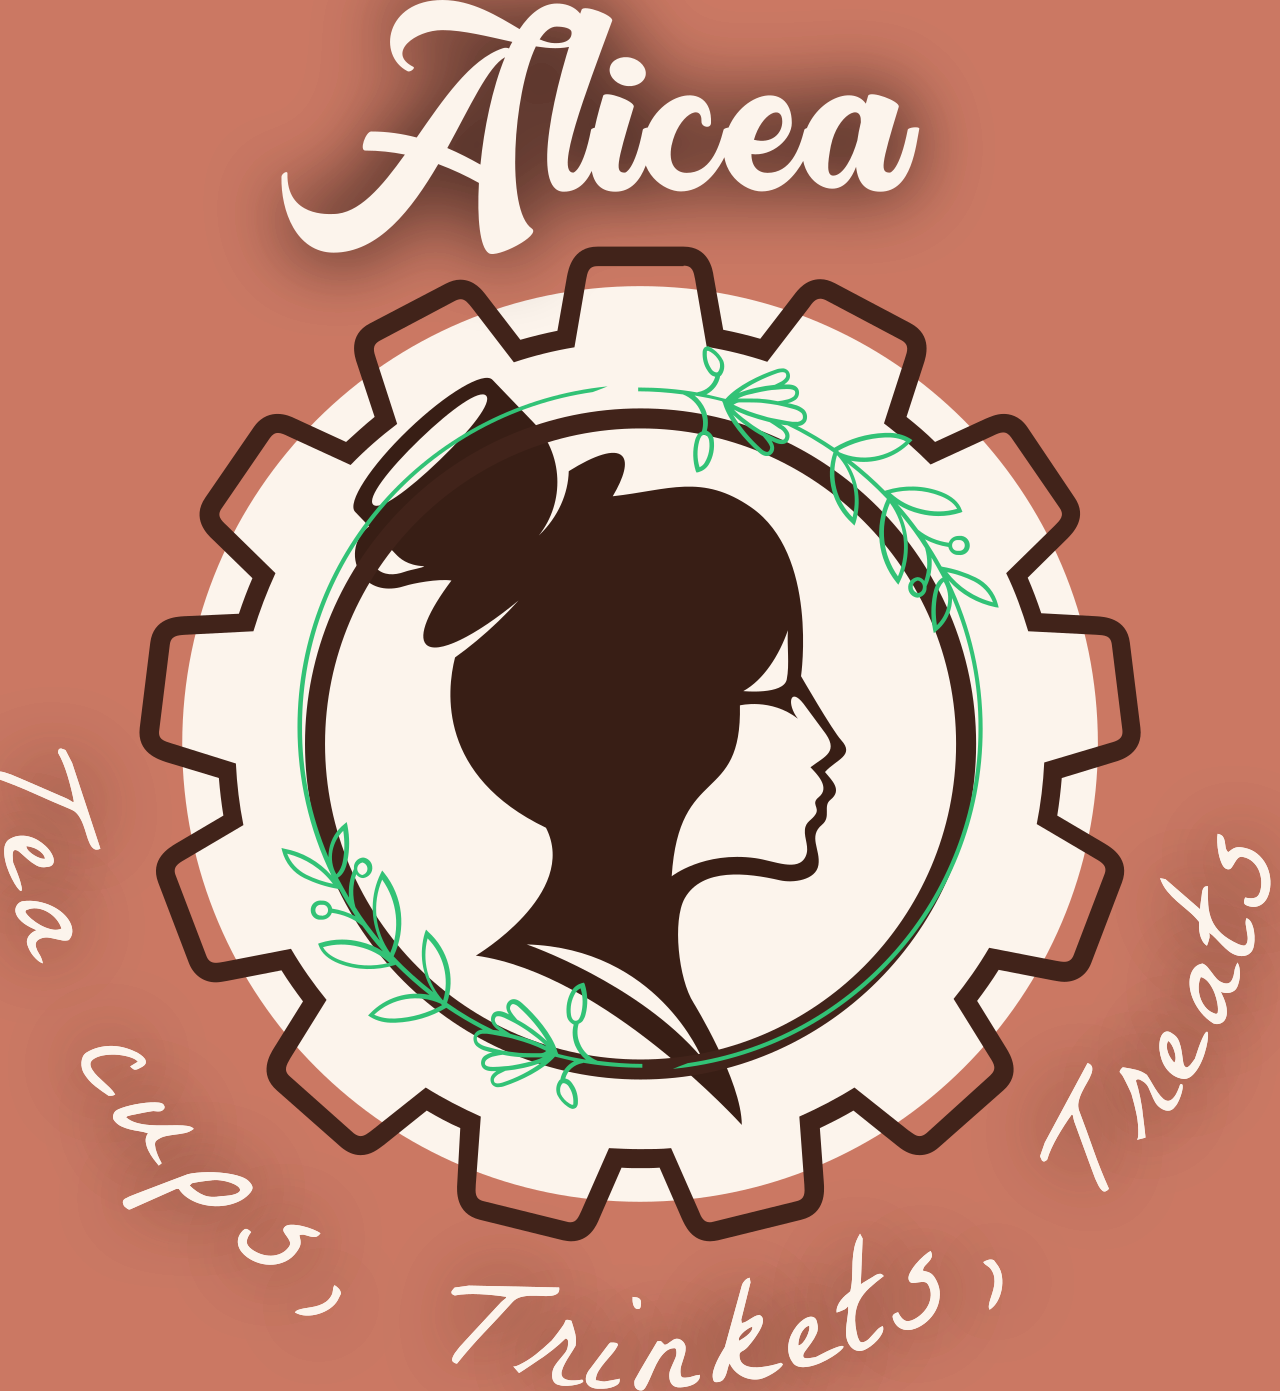 Alicea's logo